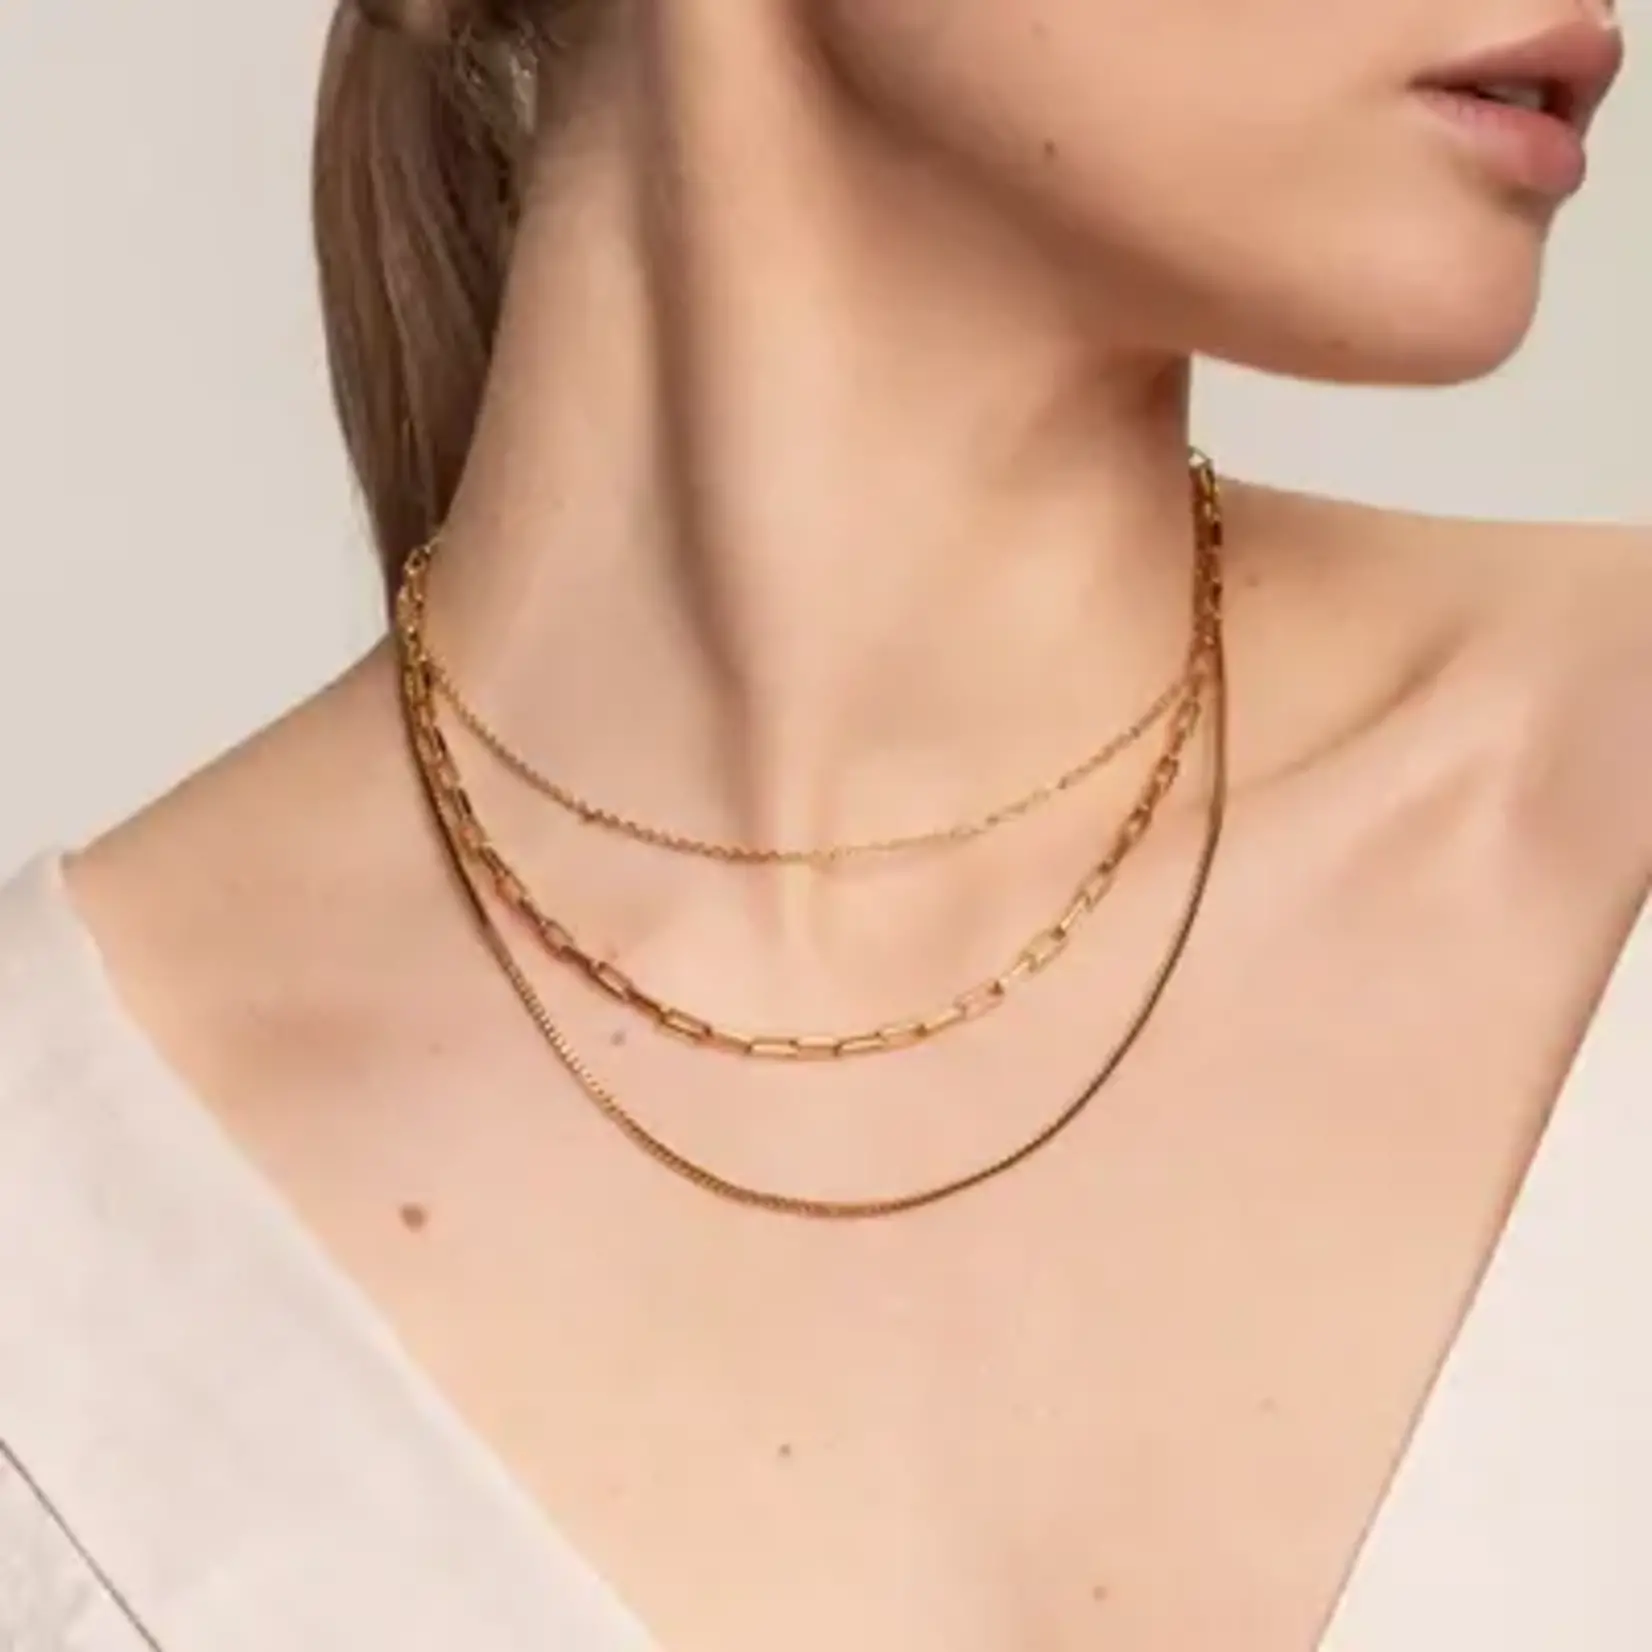 ATOLEA "Saona" Layered Necklace